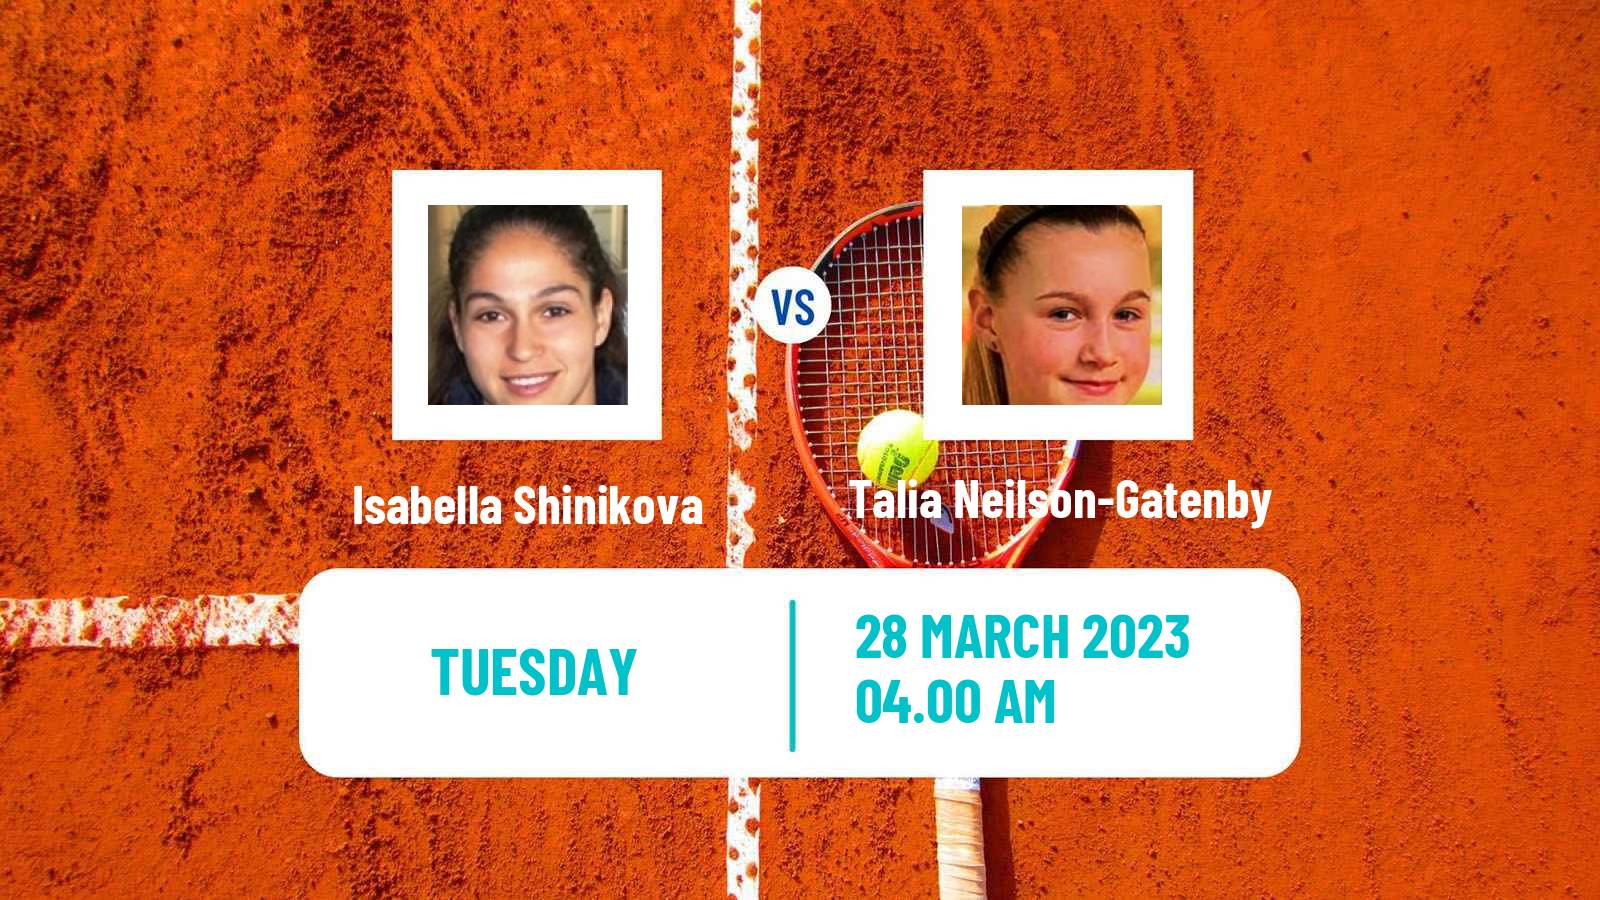 Tennis ITF Tournaments Isabella Shinikova - Talia Neilson-Gatenby